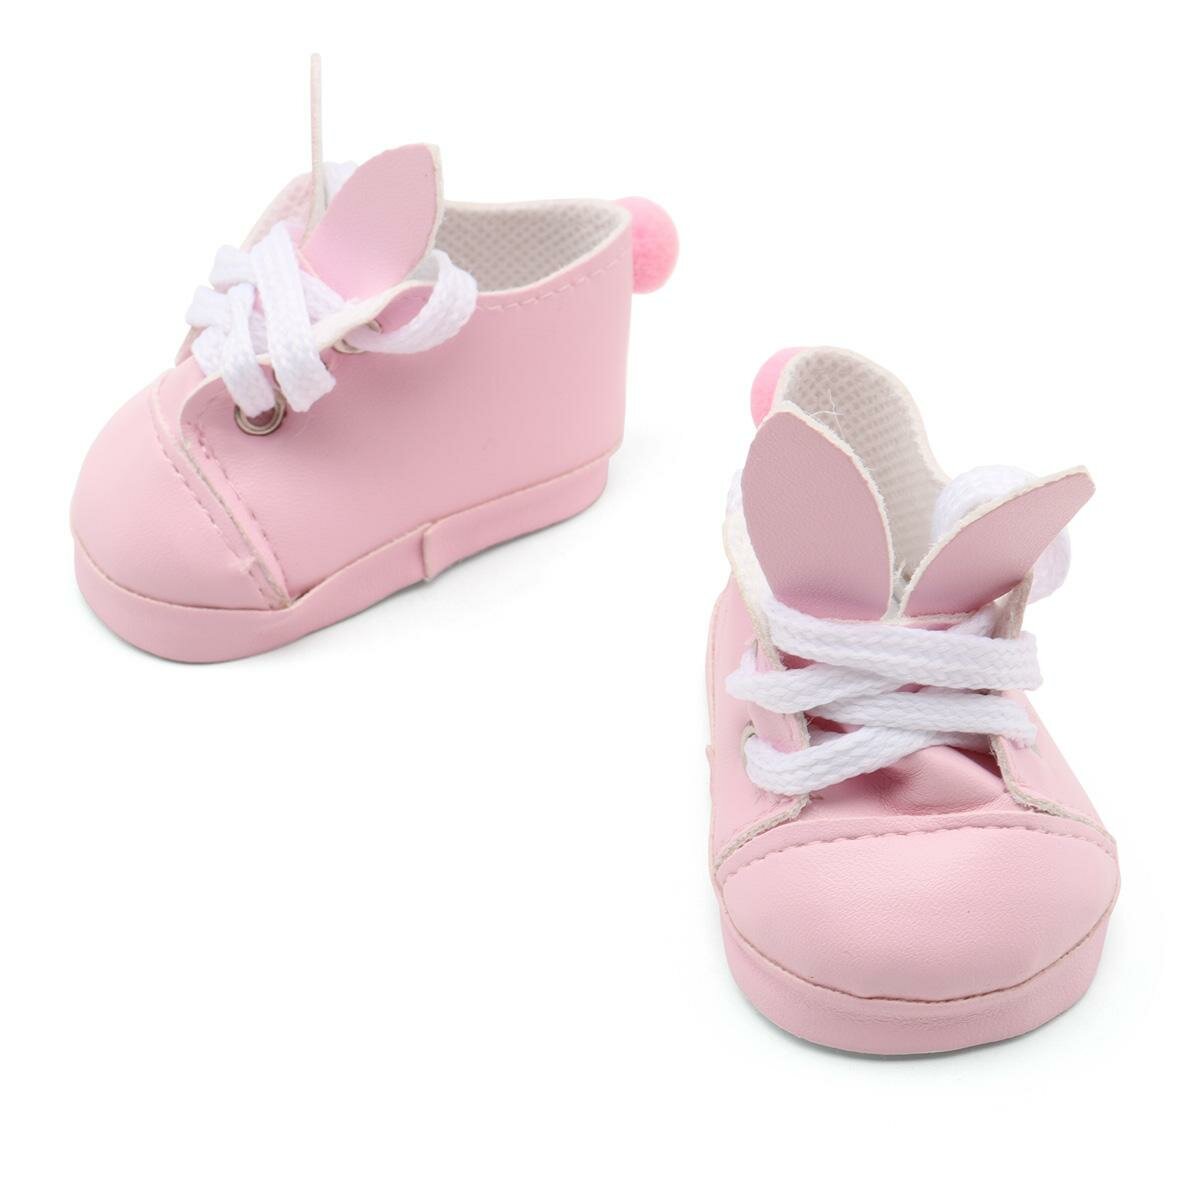 Ботиночки для кукол Astra&Craft Розовые, 7х3,7х3,5 см, 1 пара, SH-0031